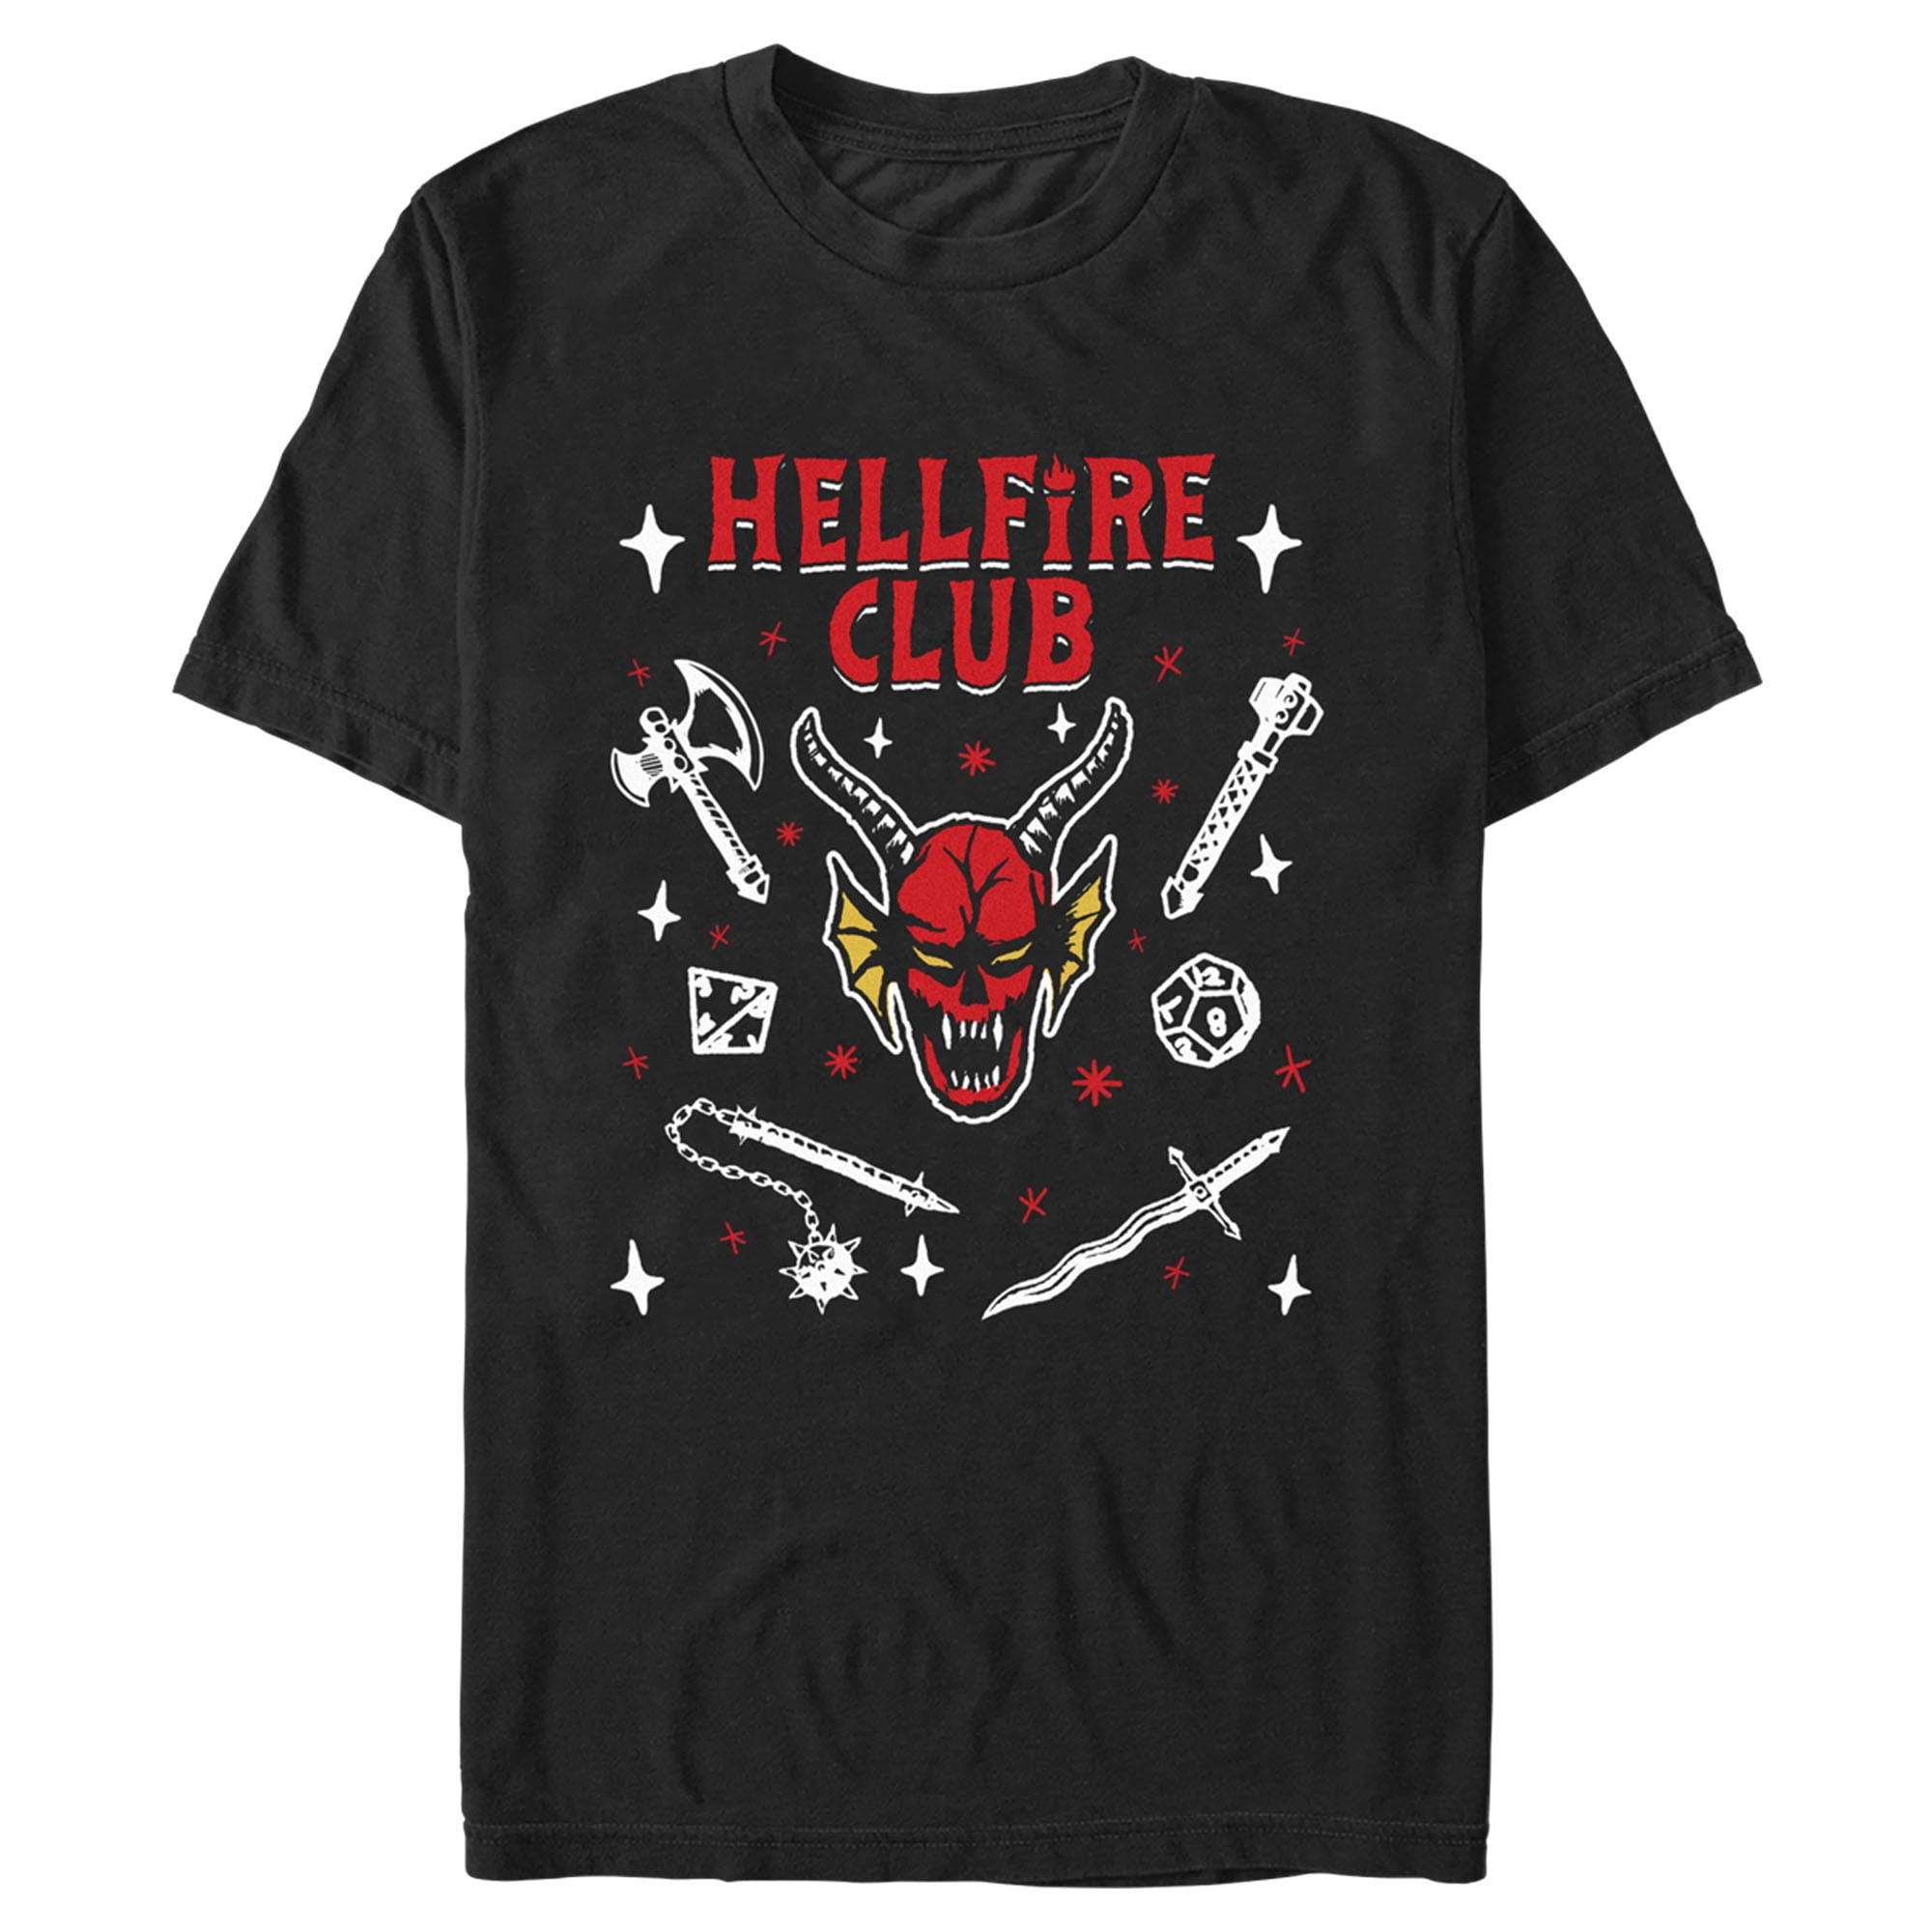 Men's Stranger Things Hellfire Club Icon Graphic Tee Black X Large